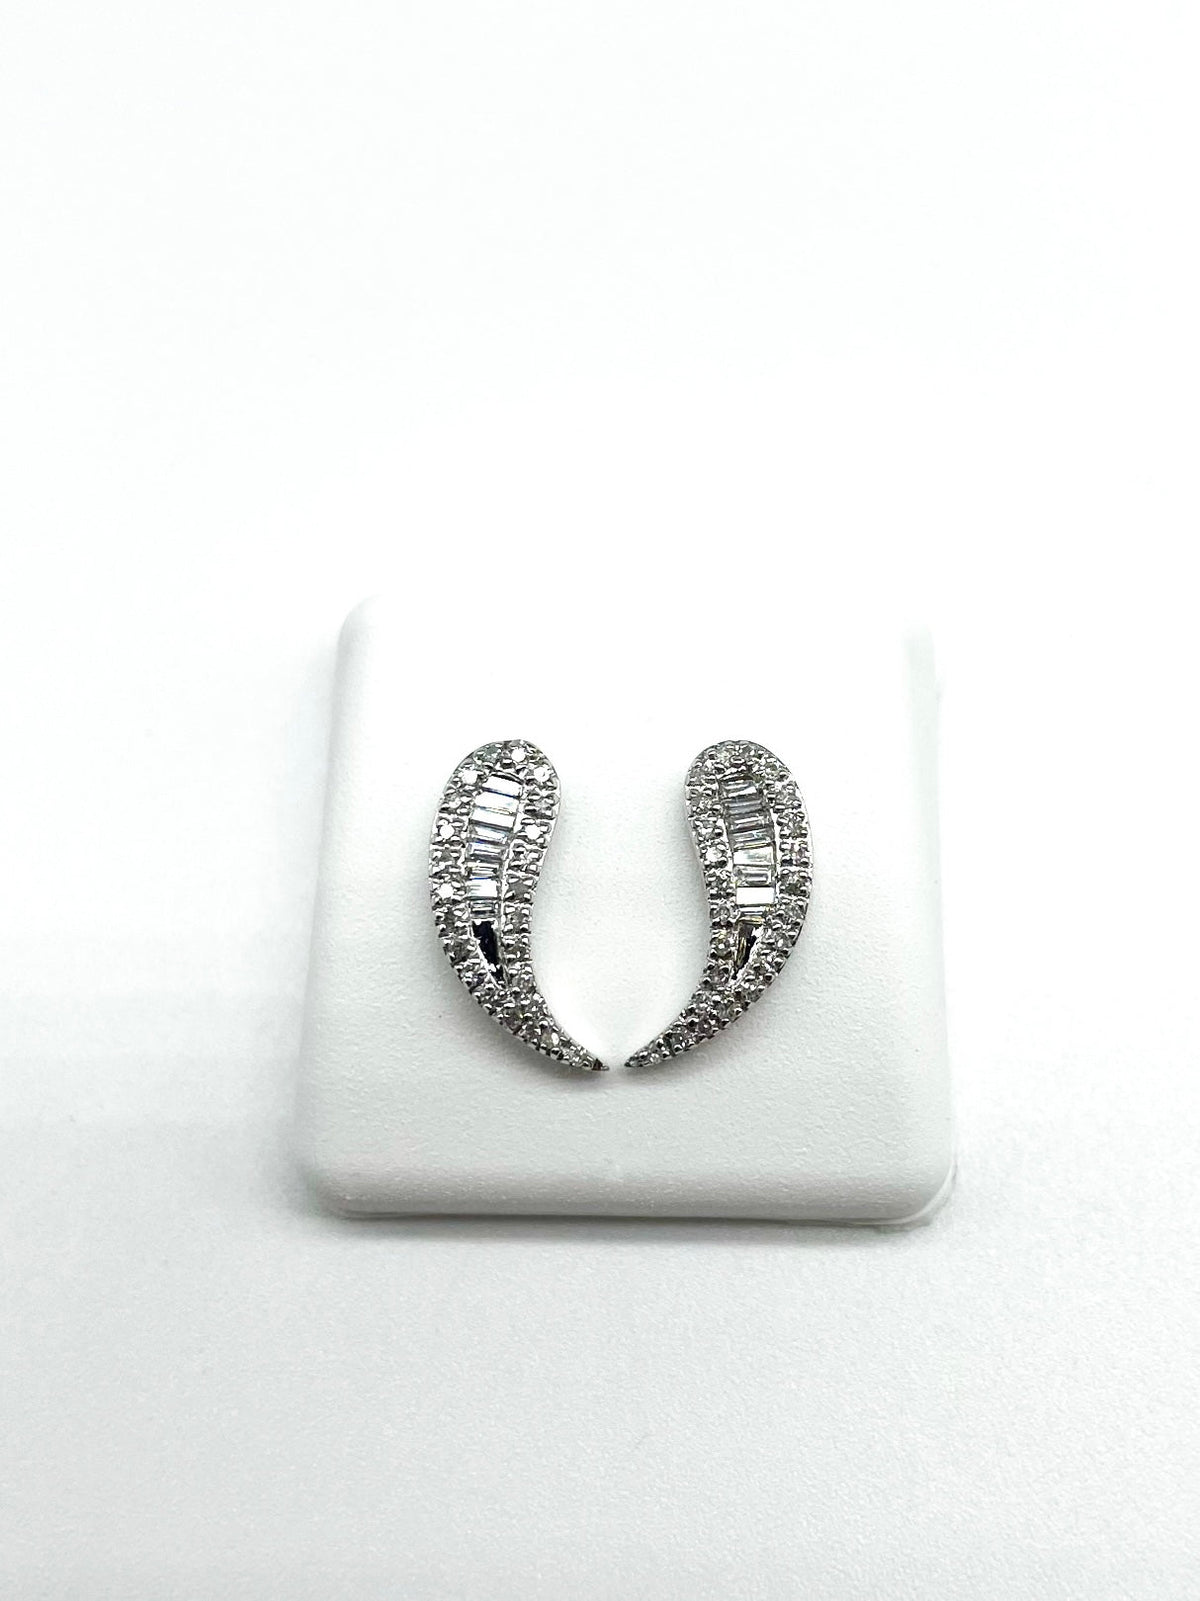 .55 Point Round Baguette Cut Diamond Earrings